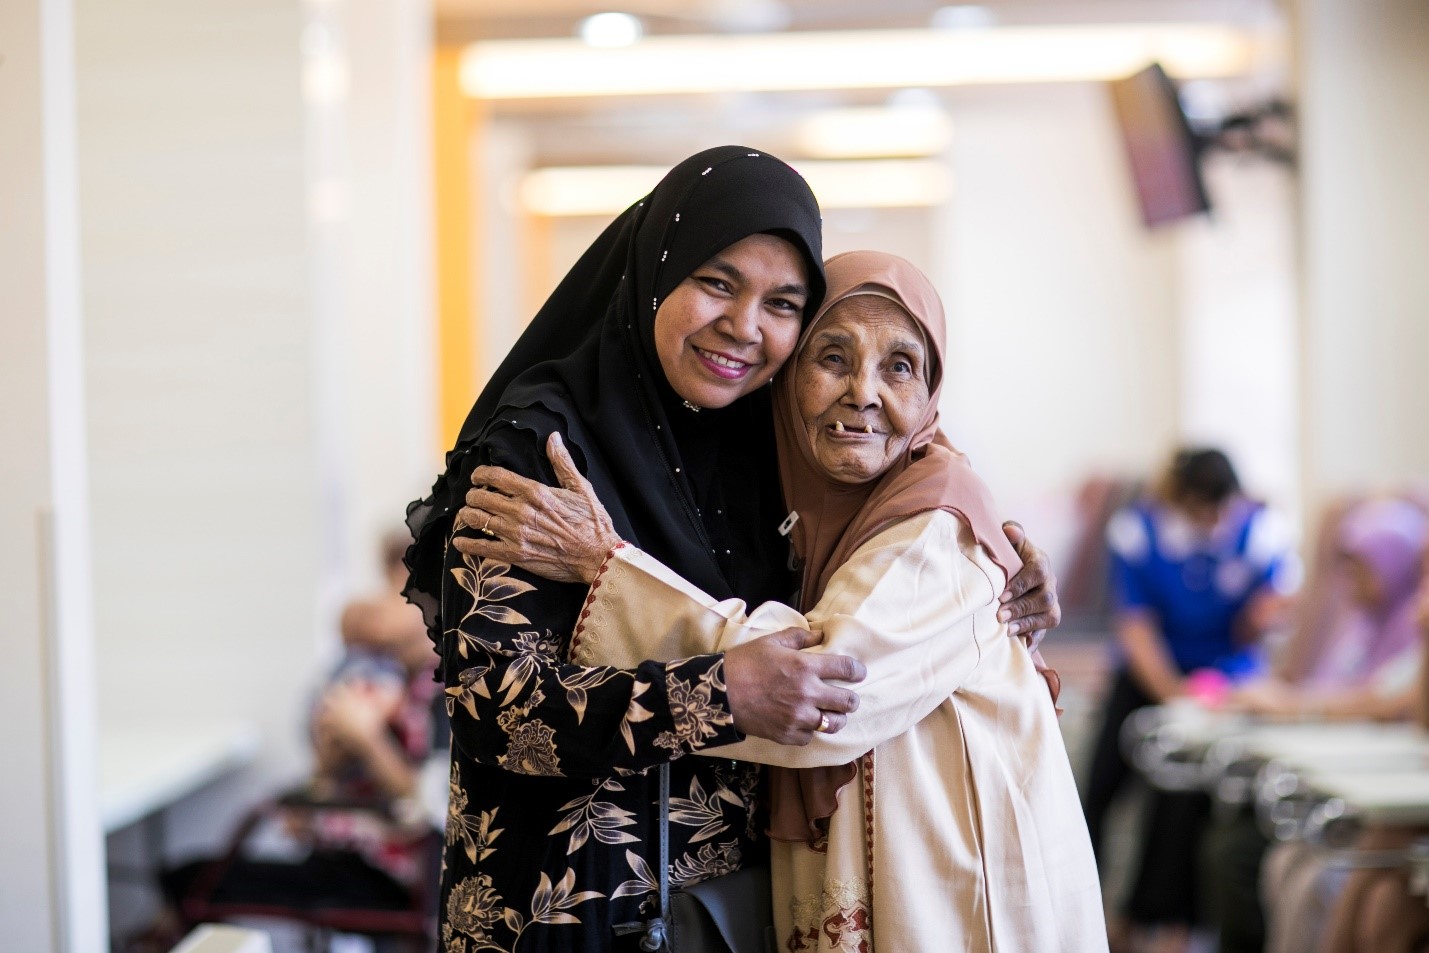 Madam Faridah Binte Hanifa, 55, shares her story of strength and hope.